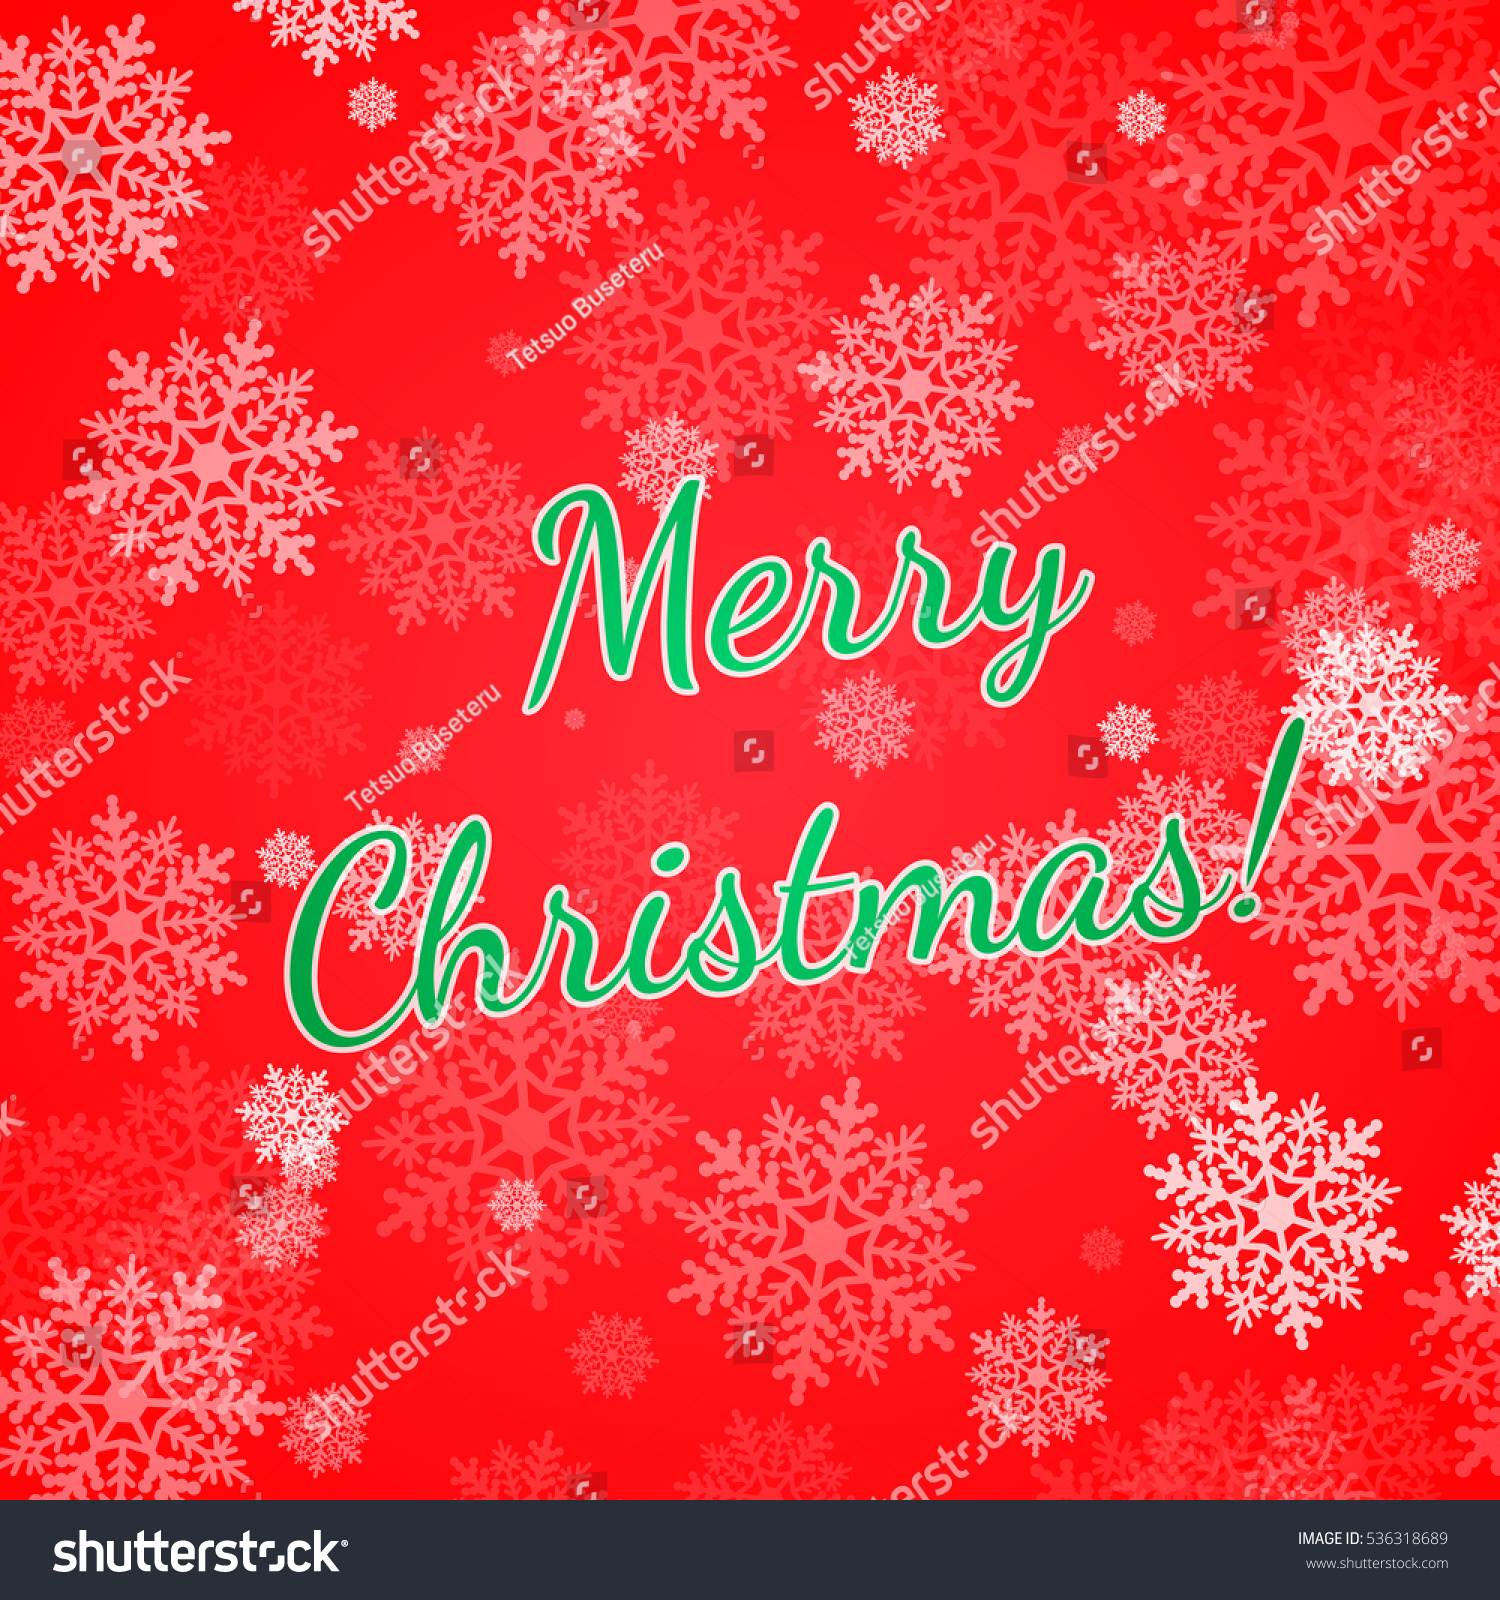 Download Edit Vectors Free Online - The Christmas congratulation ...